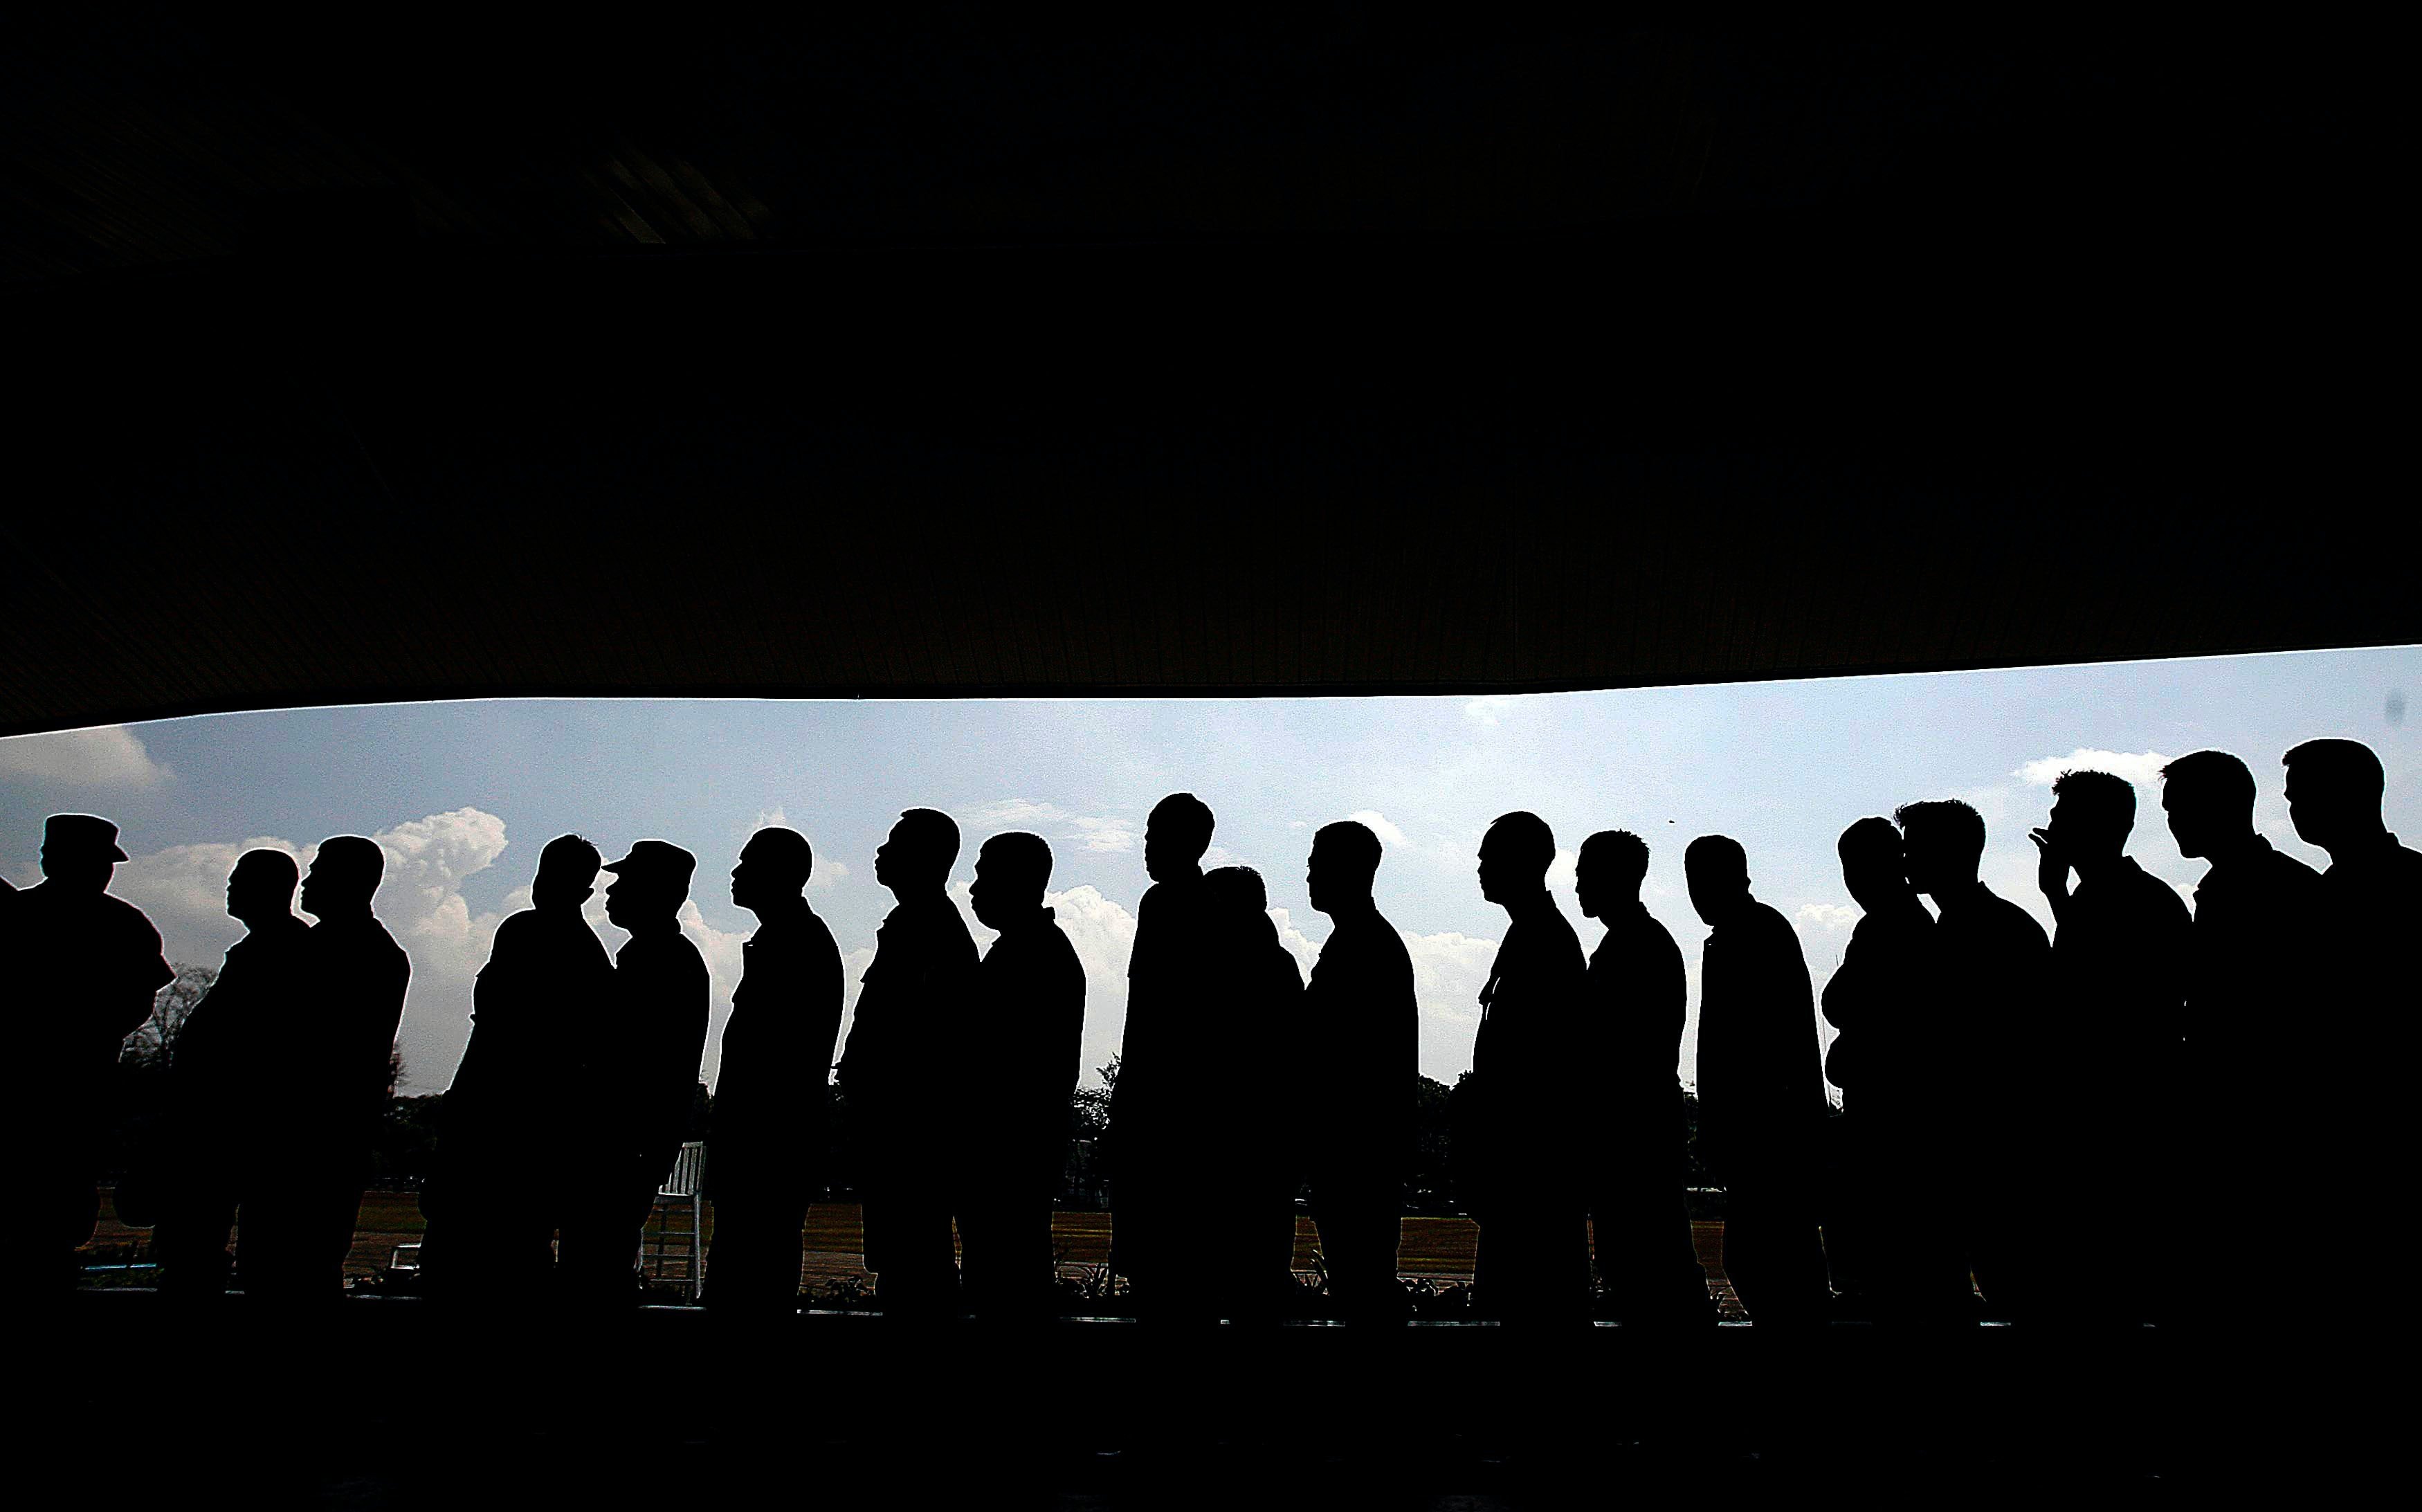 A group of men on a queue | Photo: Pexels